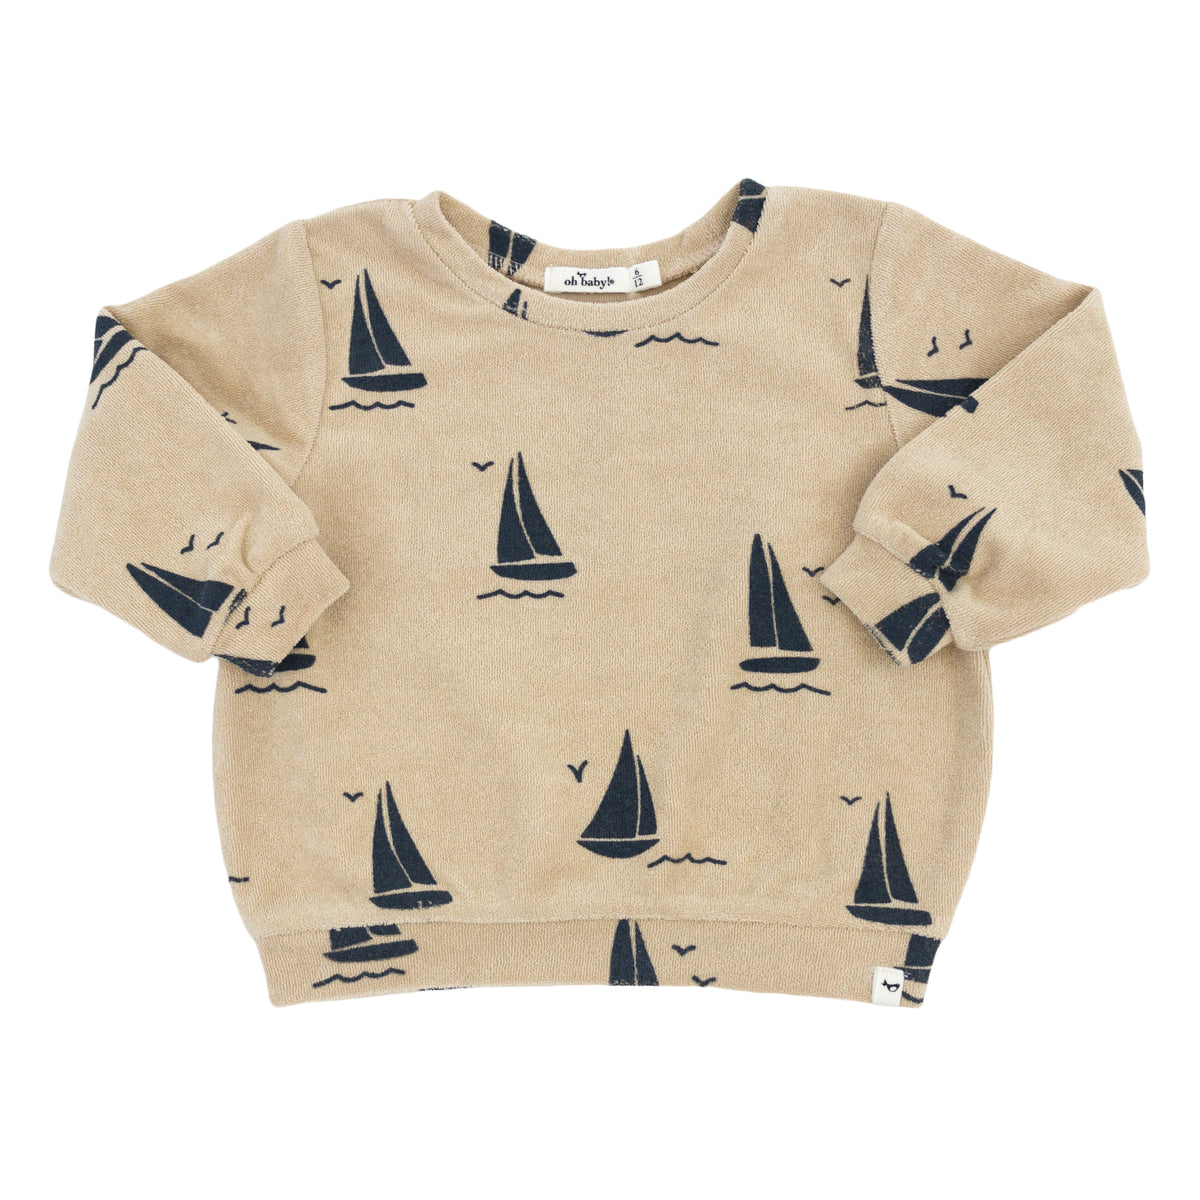 oh baby! Cotton Terry Boxy Sweatshirt - Denim Sailboats Print - Sand